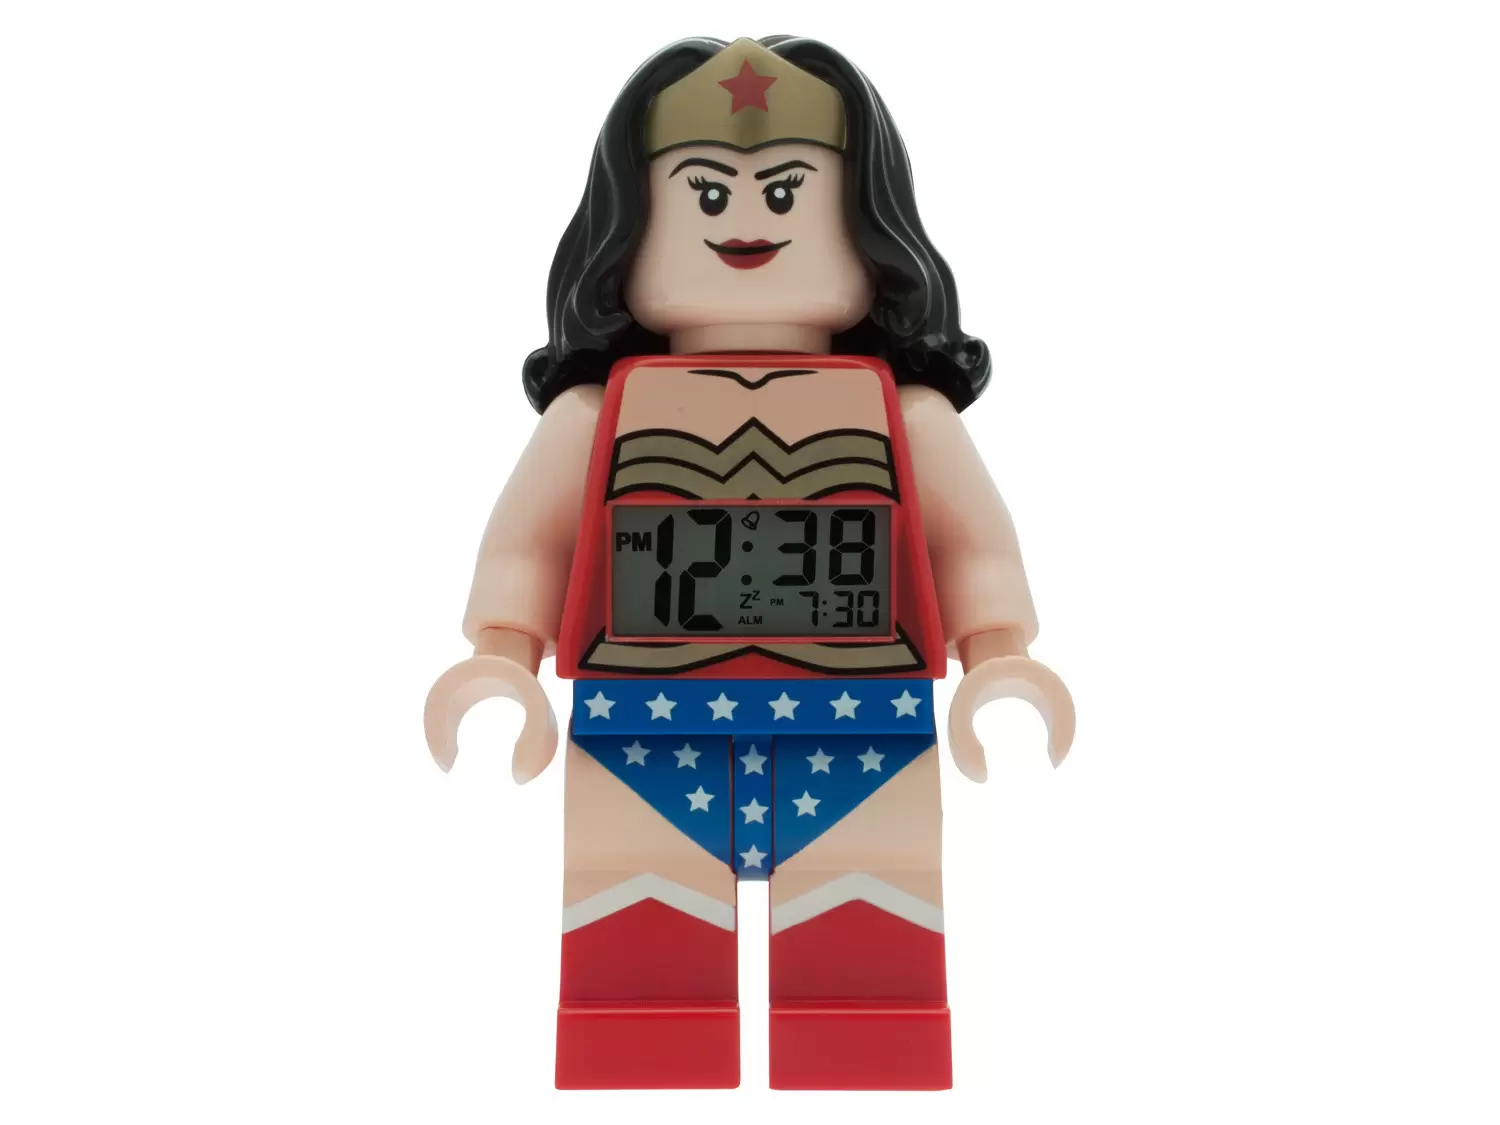 Réveil Lego Dc Comics Super Heroes - Batman : : Toys